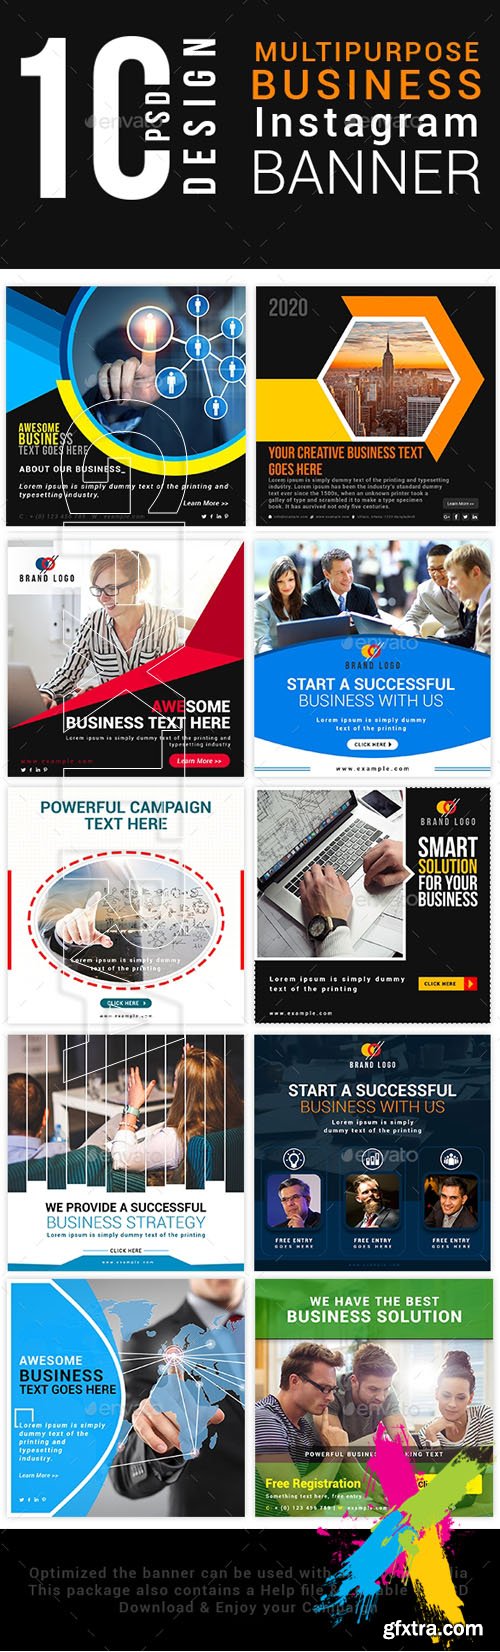 Graphicriver - Multipurpose Business Instagram Banner Vol-2 20153842